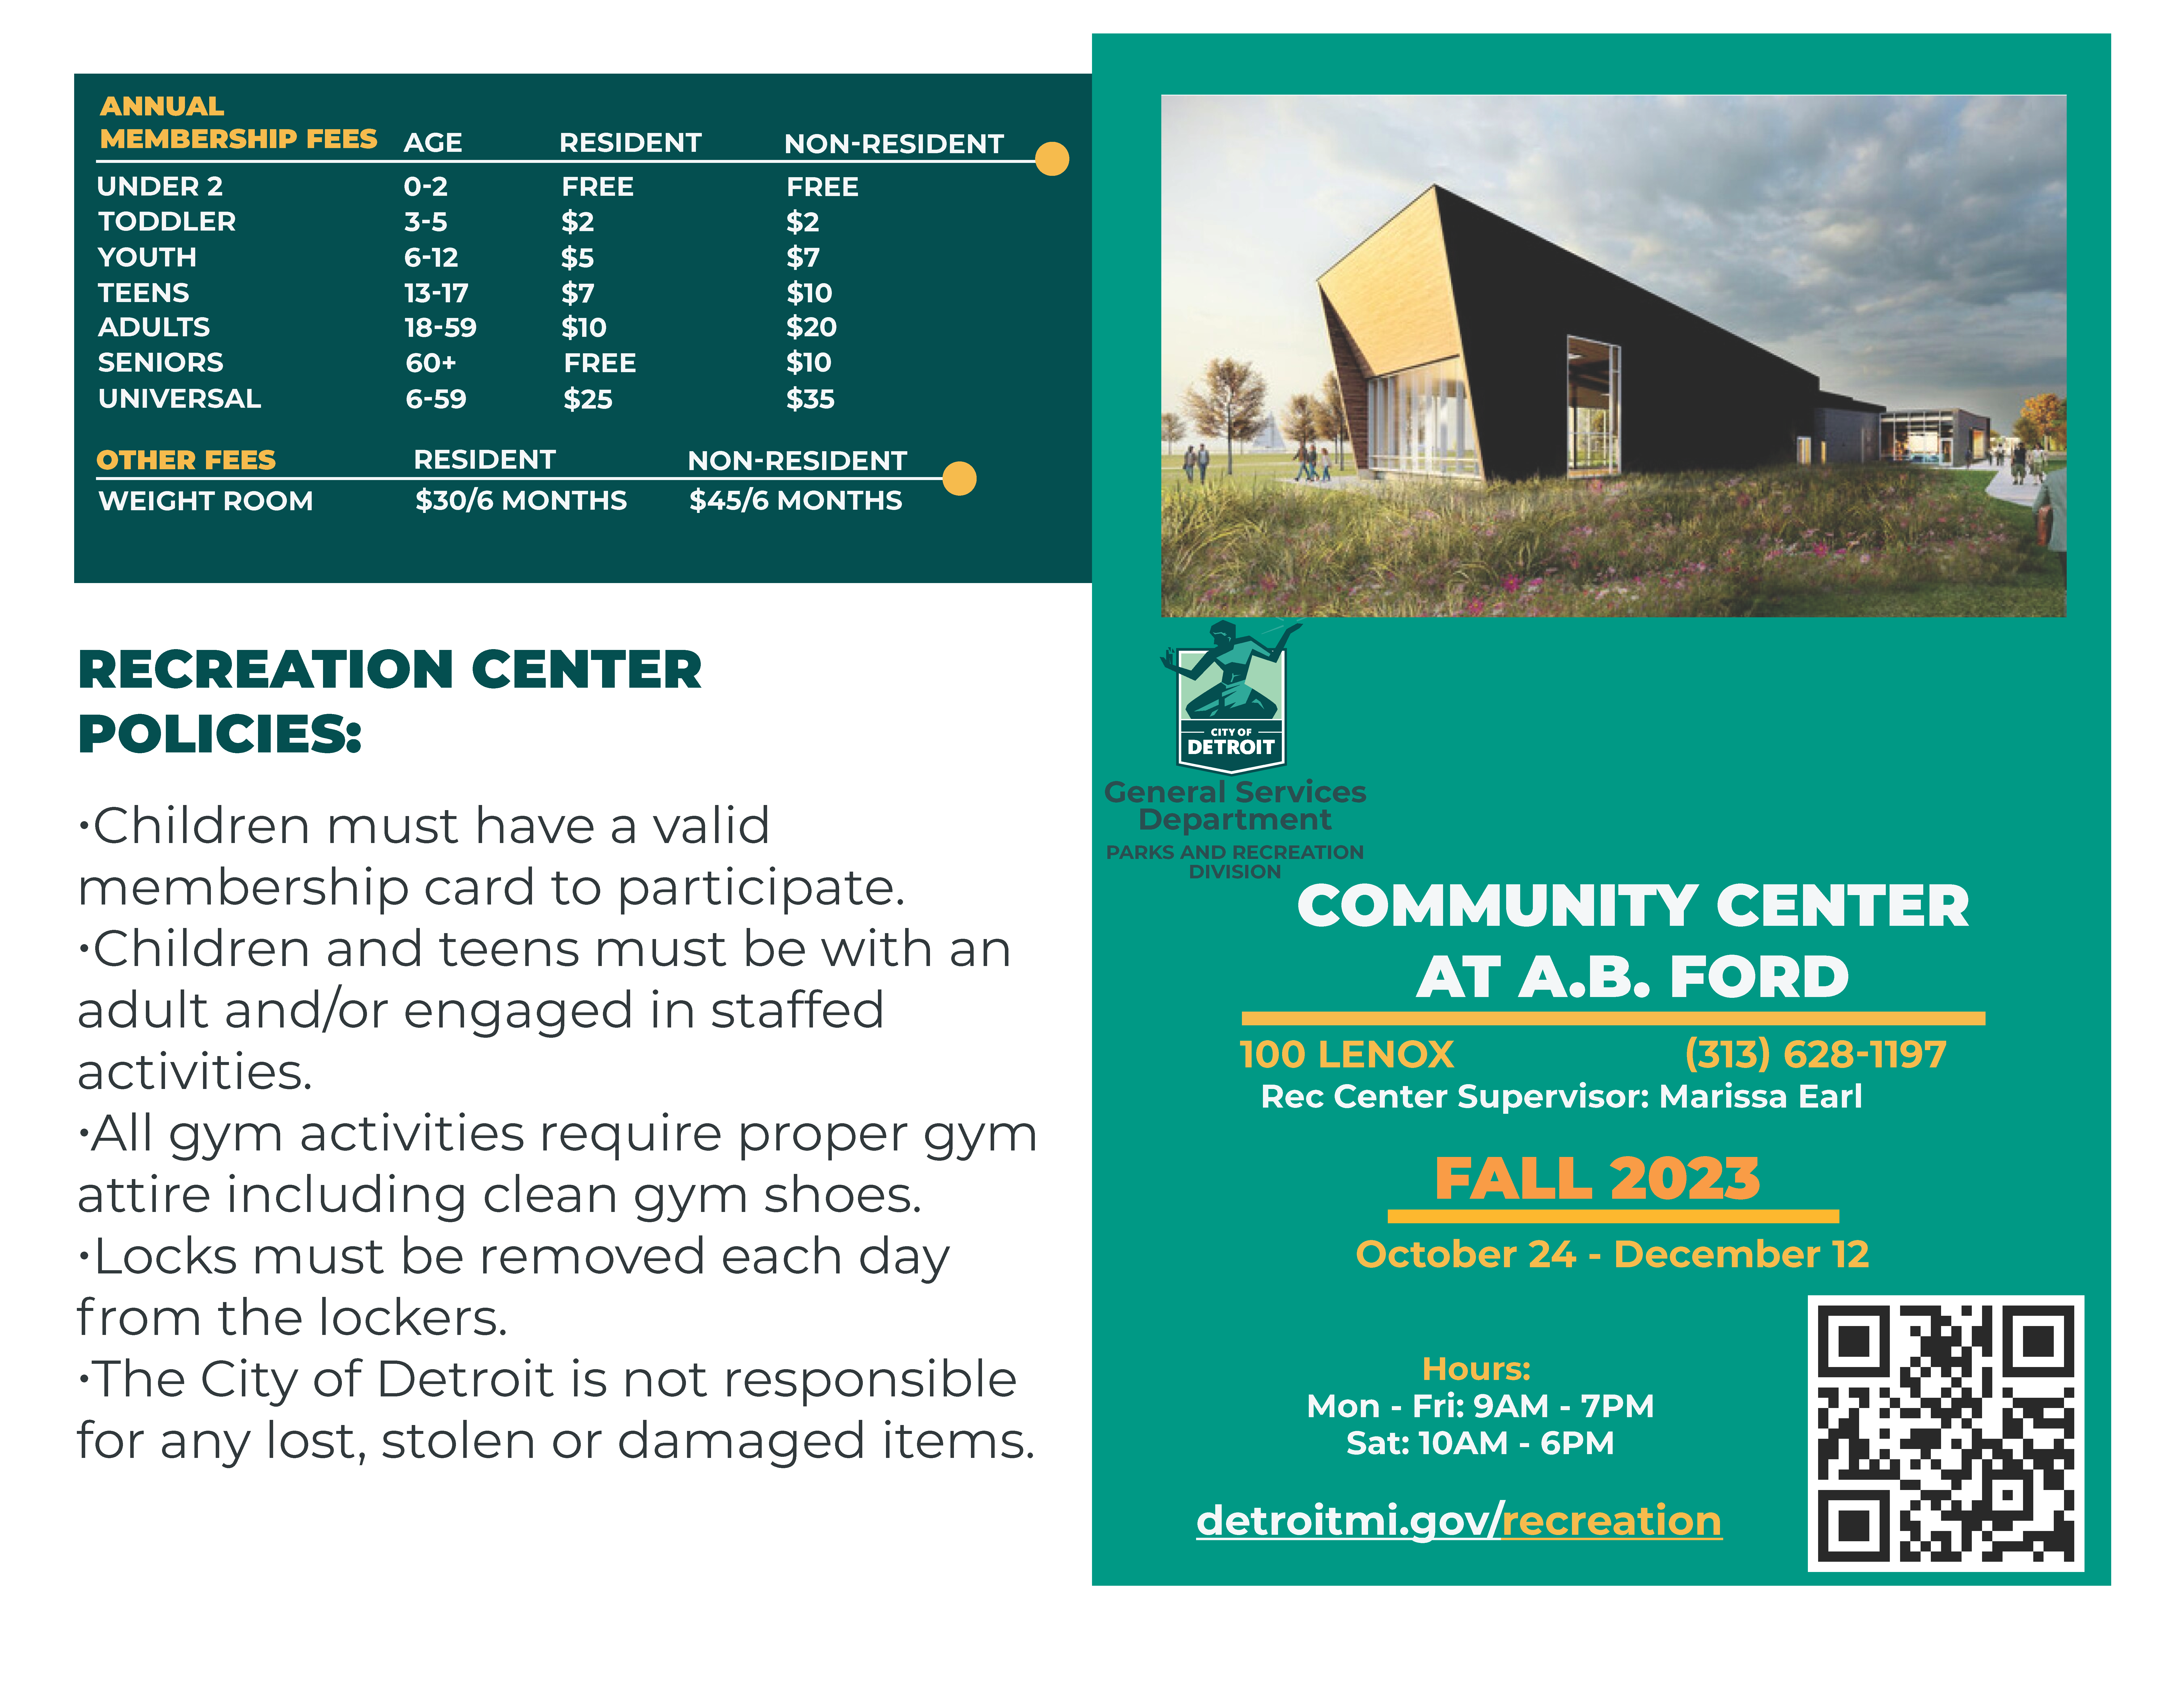 Fall Info Community Center @ A.B. Ford